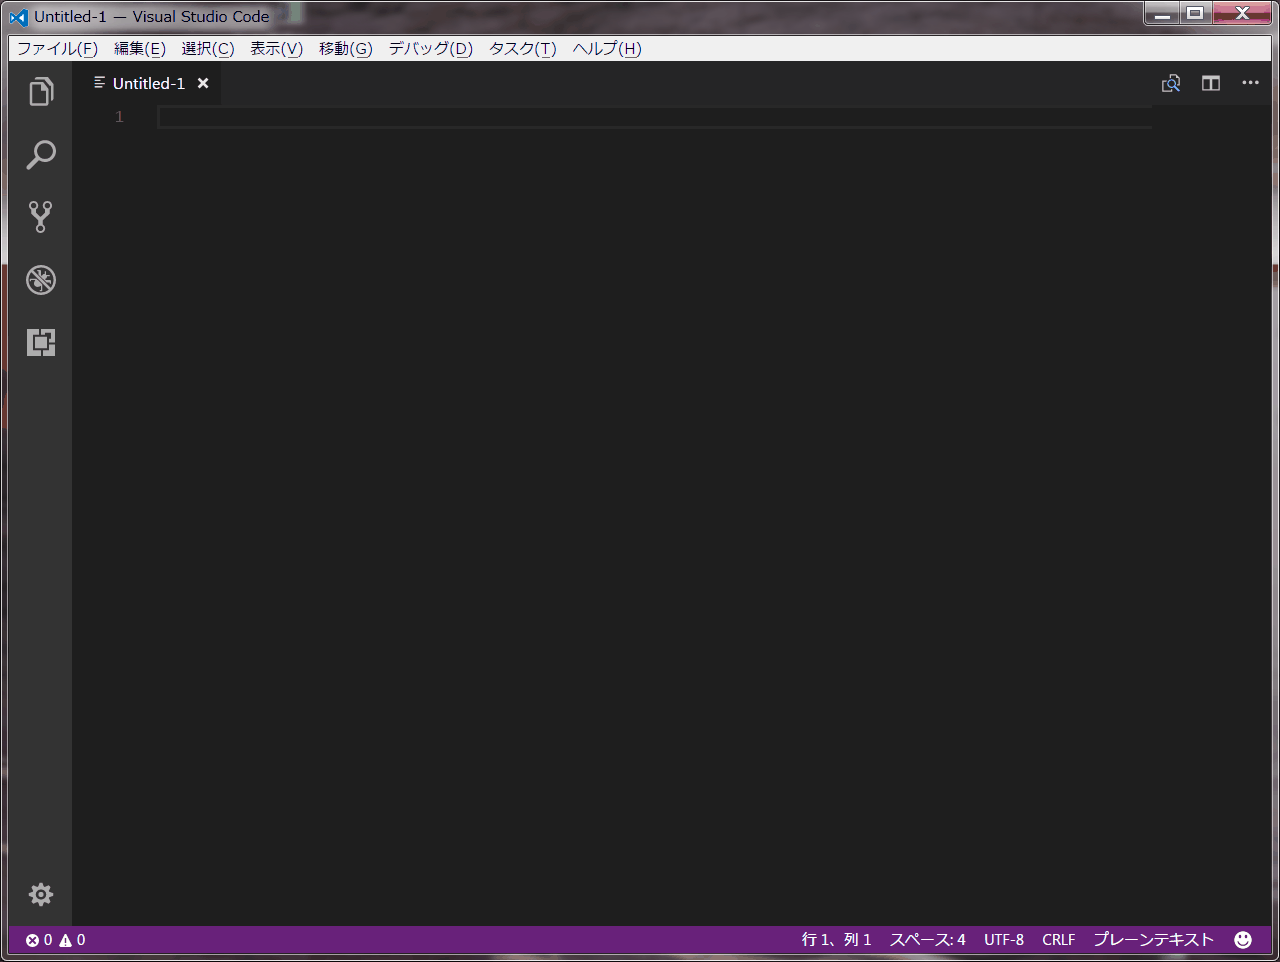 Insert Date String1 - Visual Studio Code